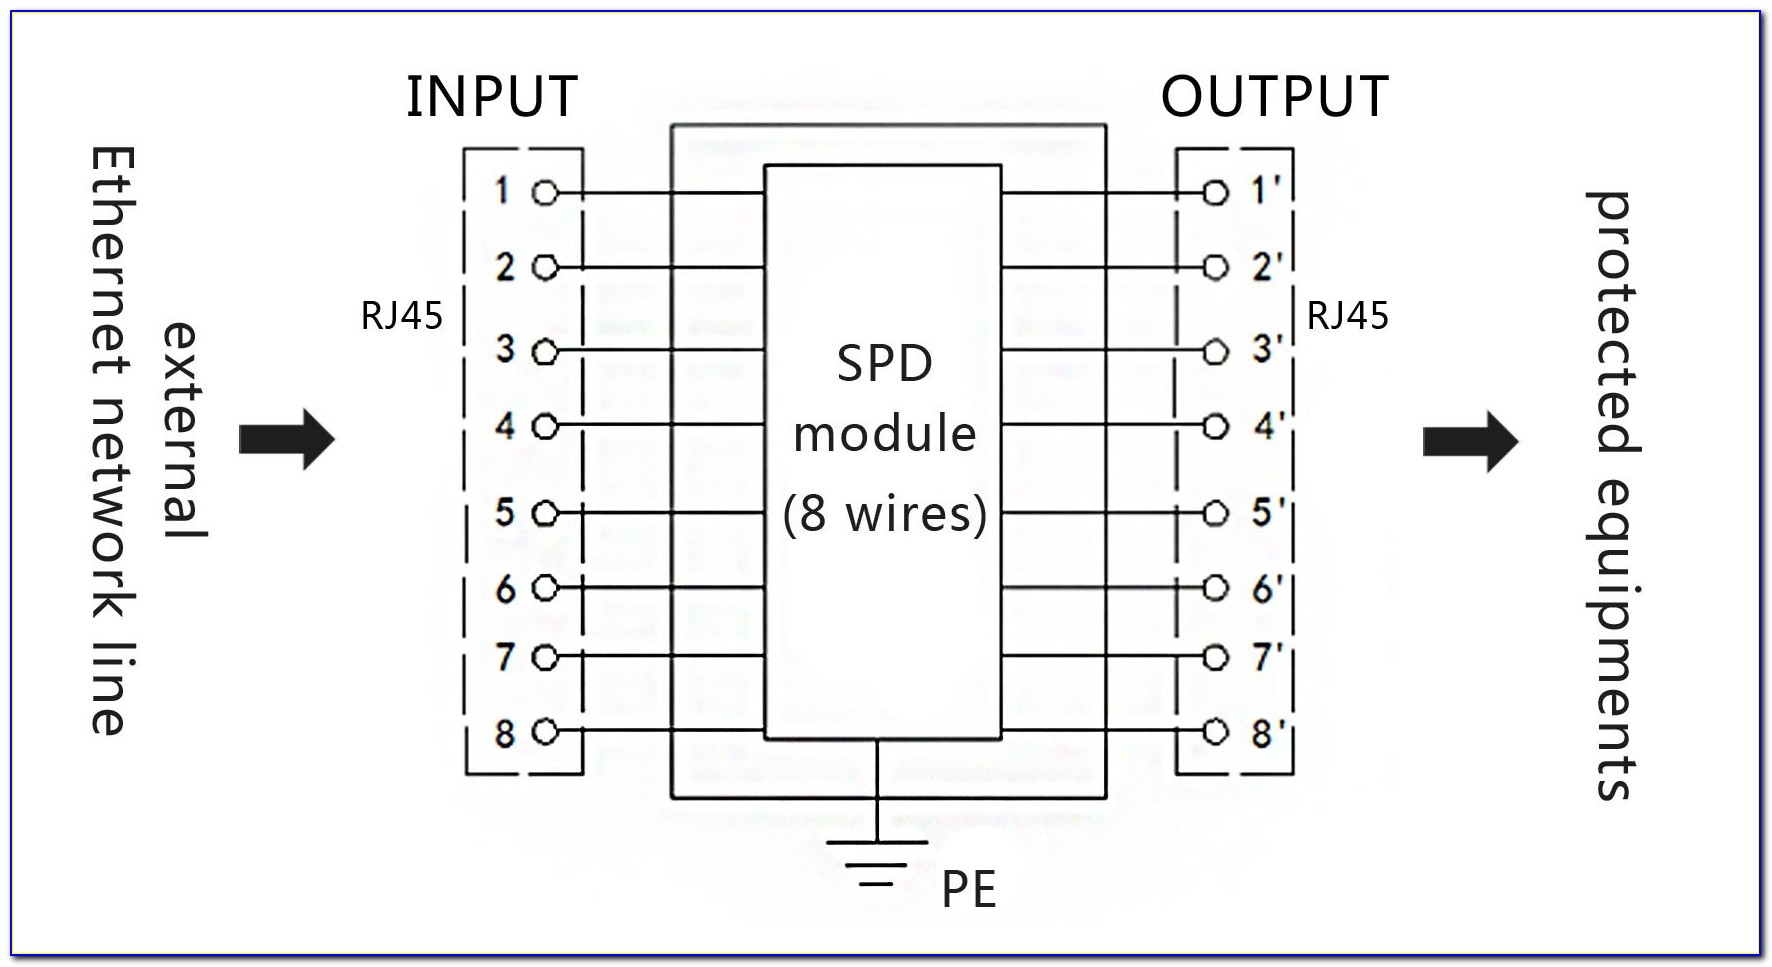 Cat5e Wiring Diagram 568b